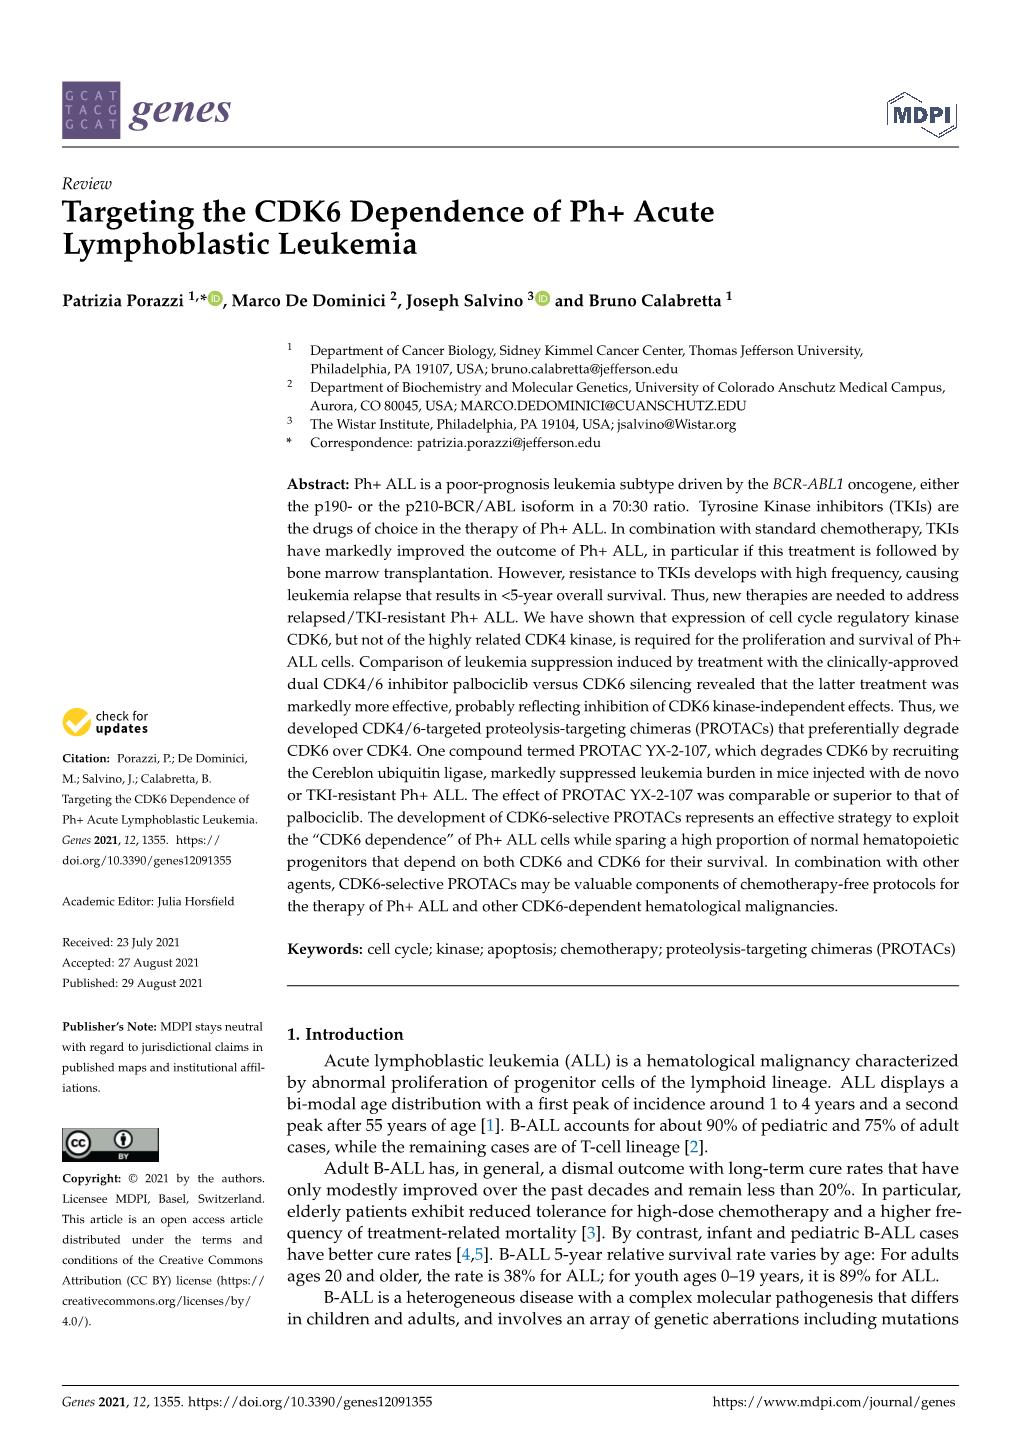 Targeting the CDK6 Dependence of Ph+ Acute Lymphoblastic Leukemia